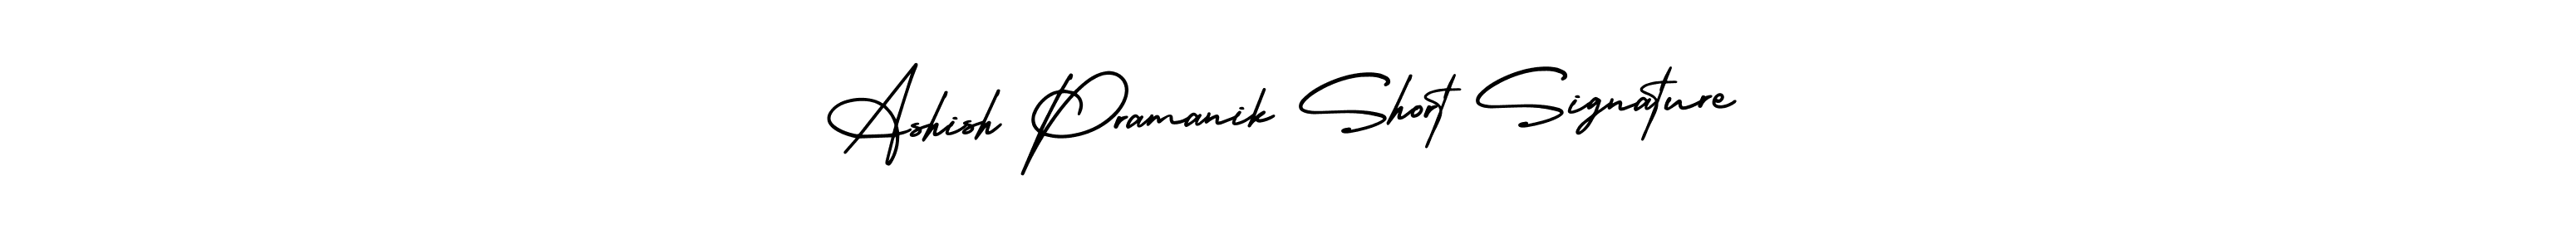 How to make Ashish Pramanik Short Signature name signature. Use AmerikaSignatureDemo-Regular style for creating short signs online. This is the latest handwritten sign. Ashish Pramanik Short Signature signature style 3 images and pictures png